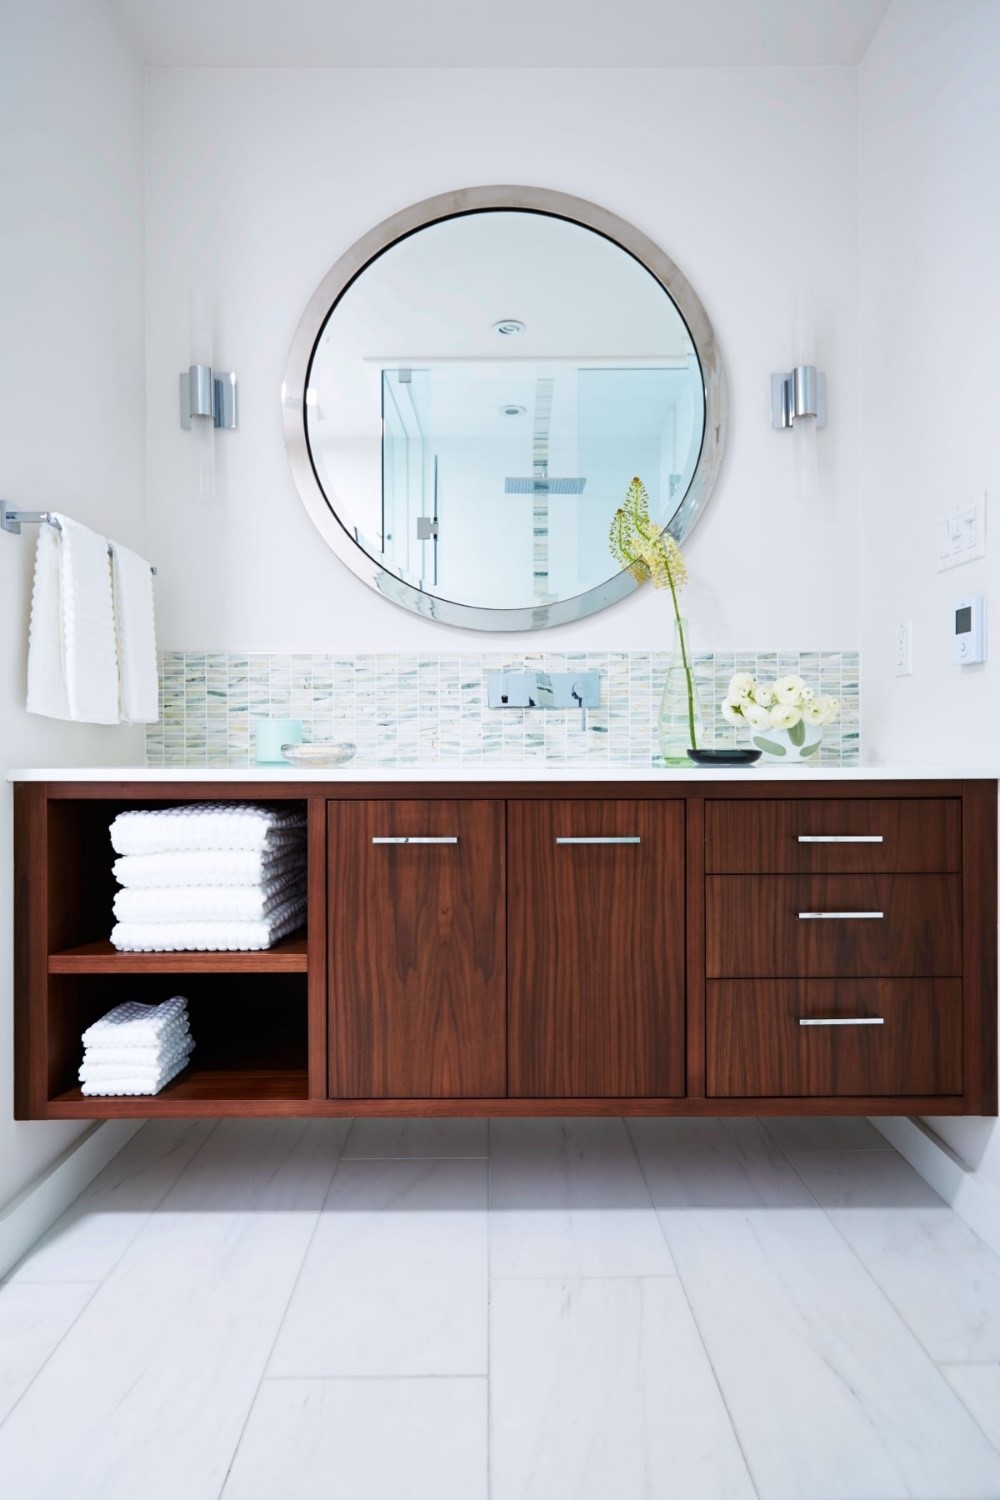 8 Undermount Sink in Mid Century Modern Bathroom Simphome com